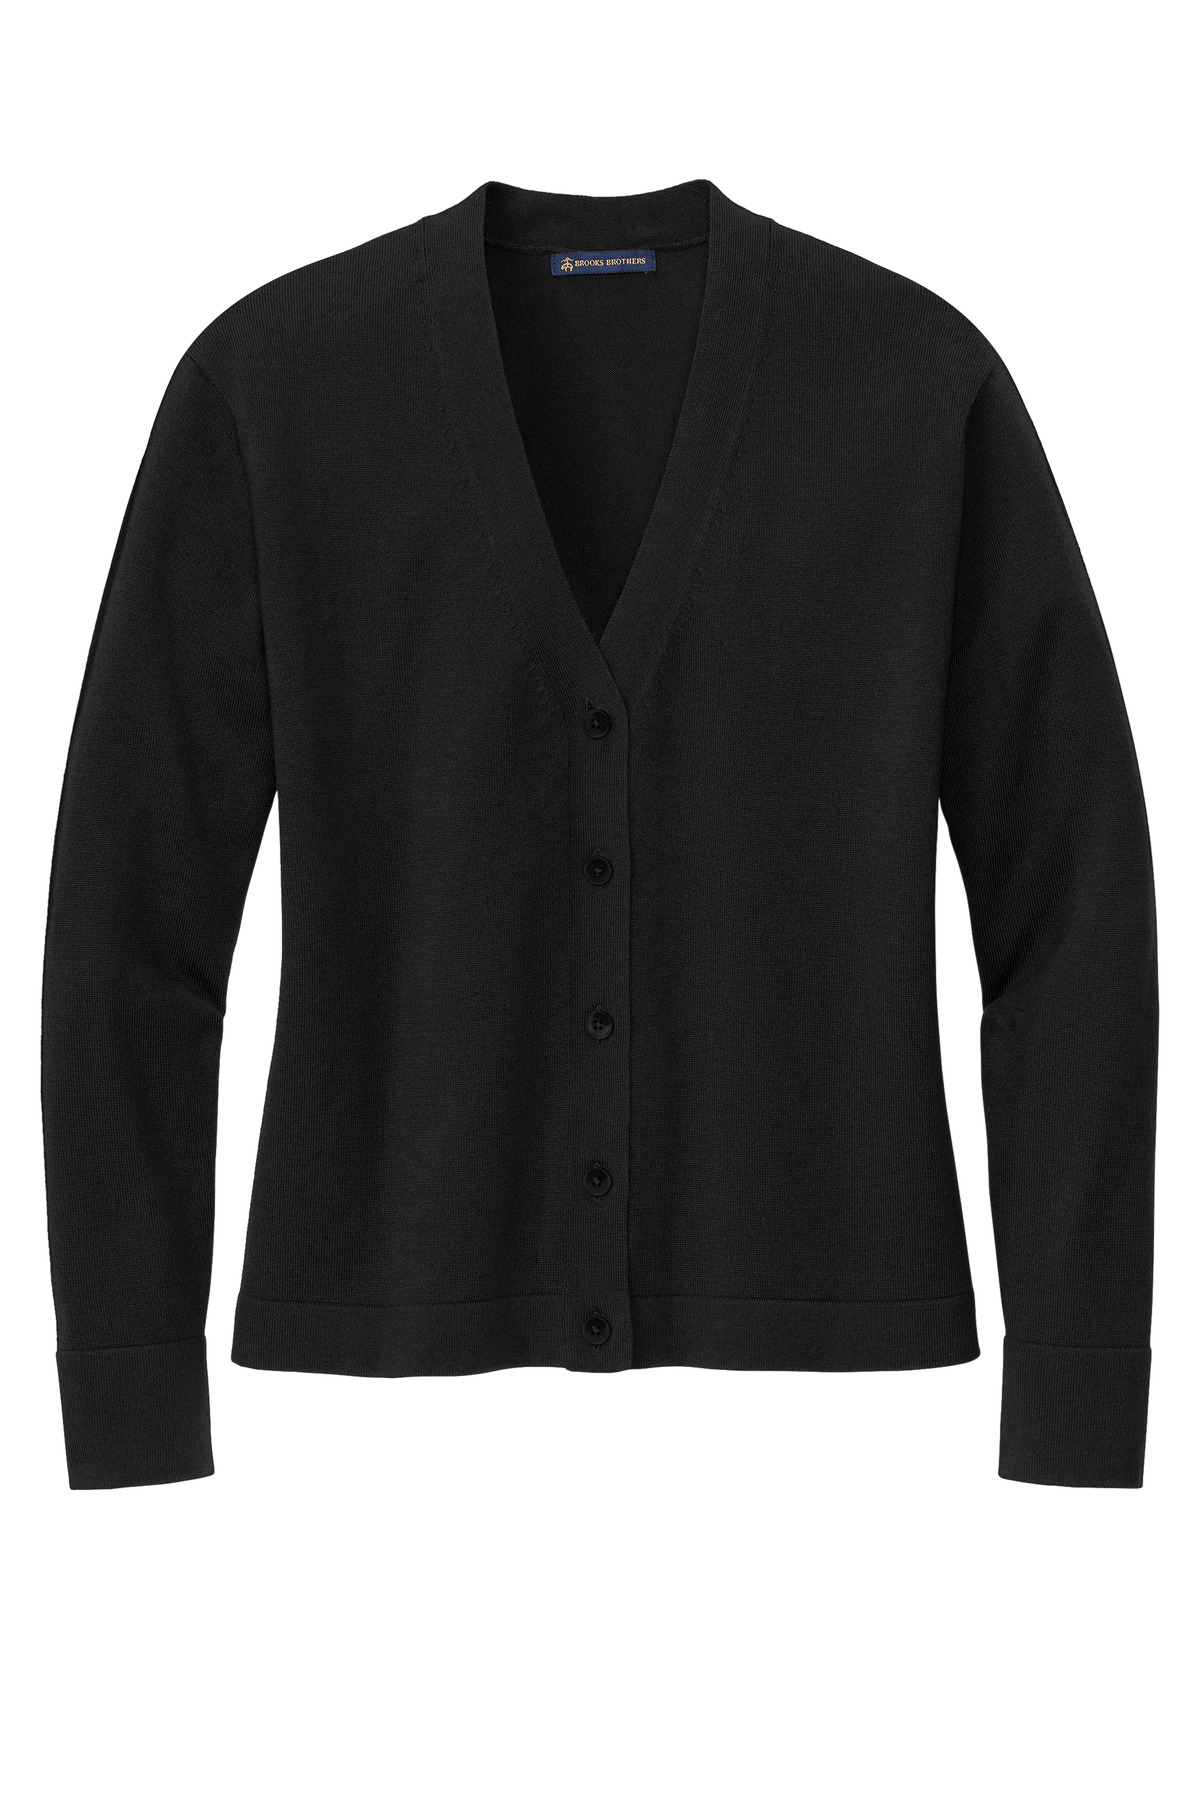 Brooks Brothers Womens Cotton Stretch Cardigan Sweater BB18405